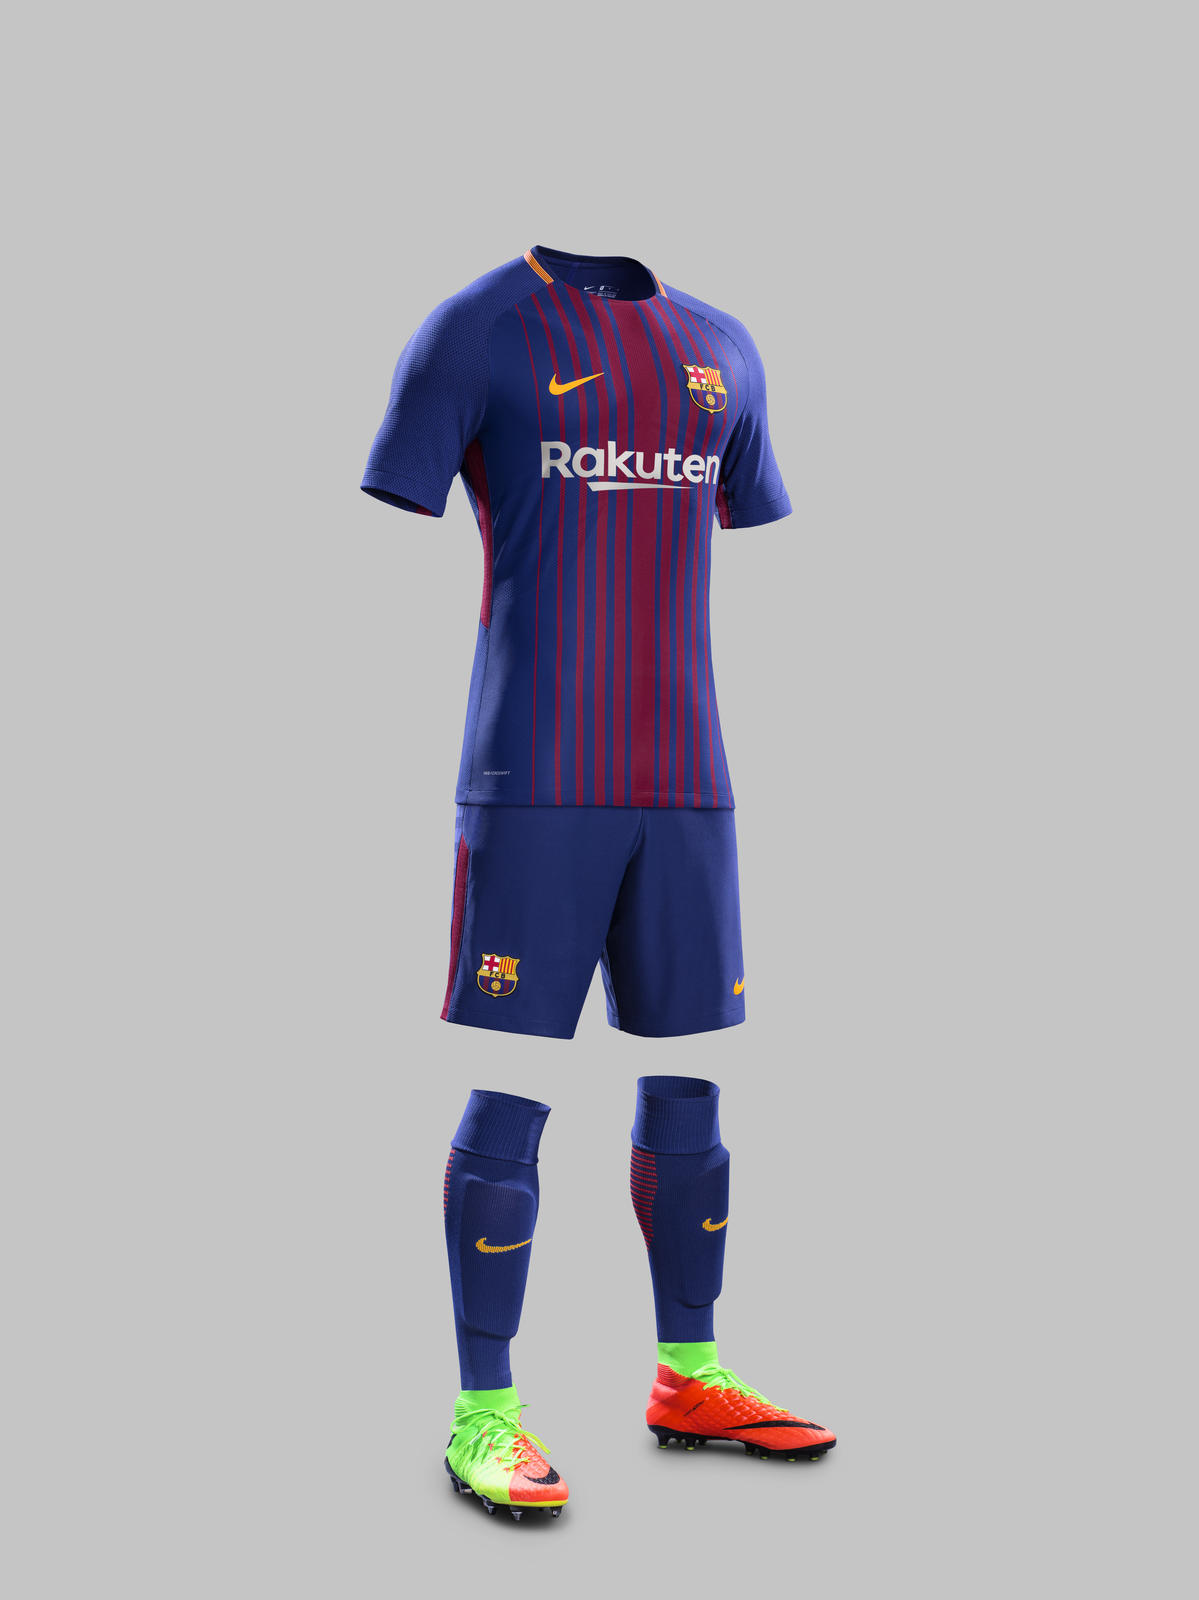 Barcelona thuisshirt - Voetbalshirts.com